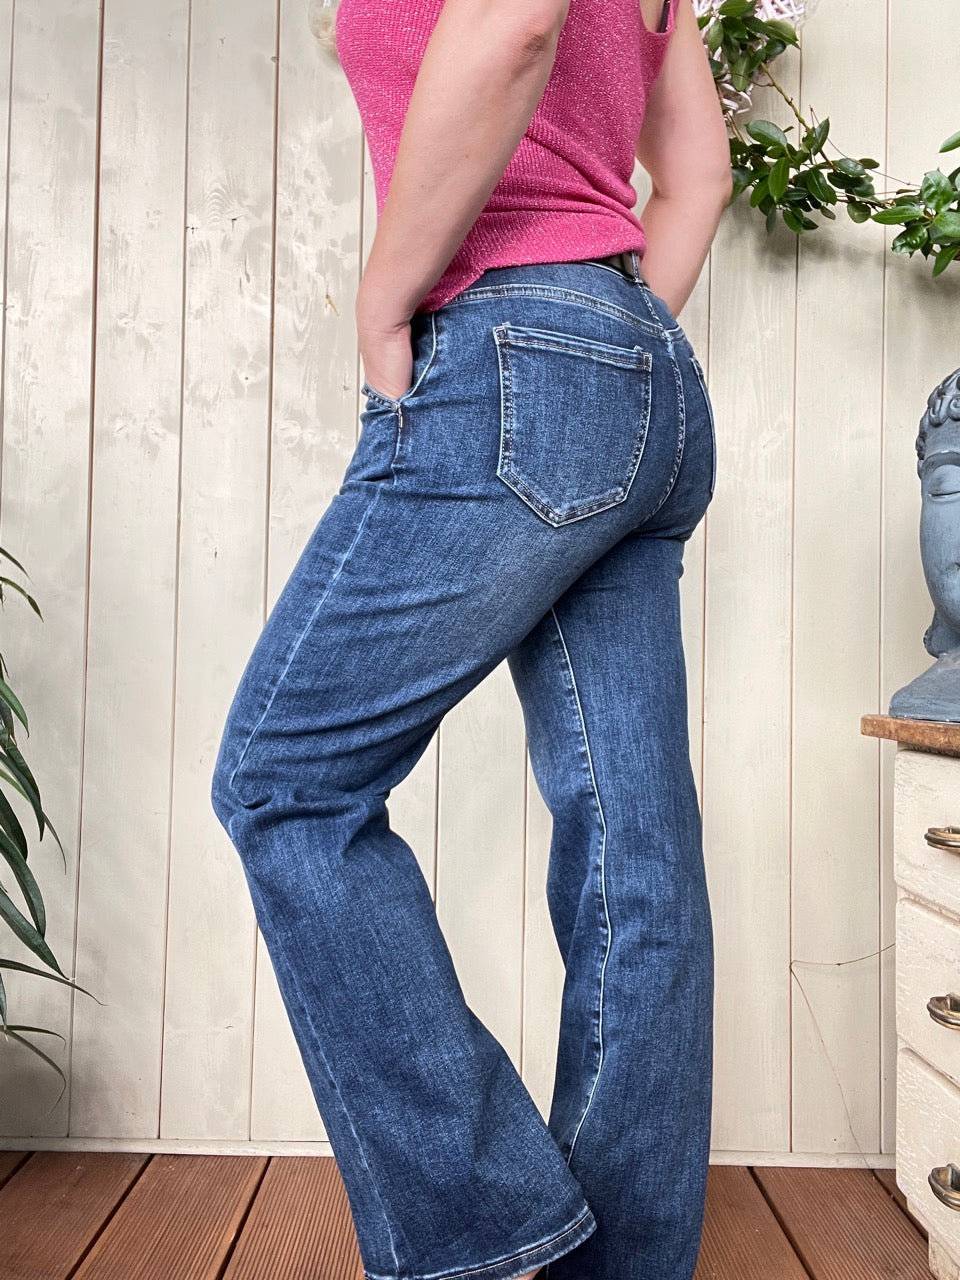 Hose Jeans Street Style Denim